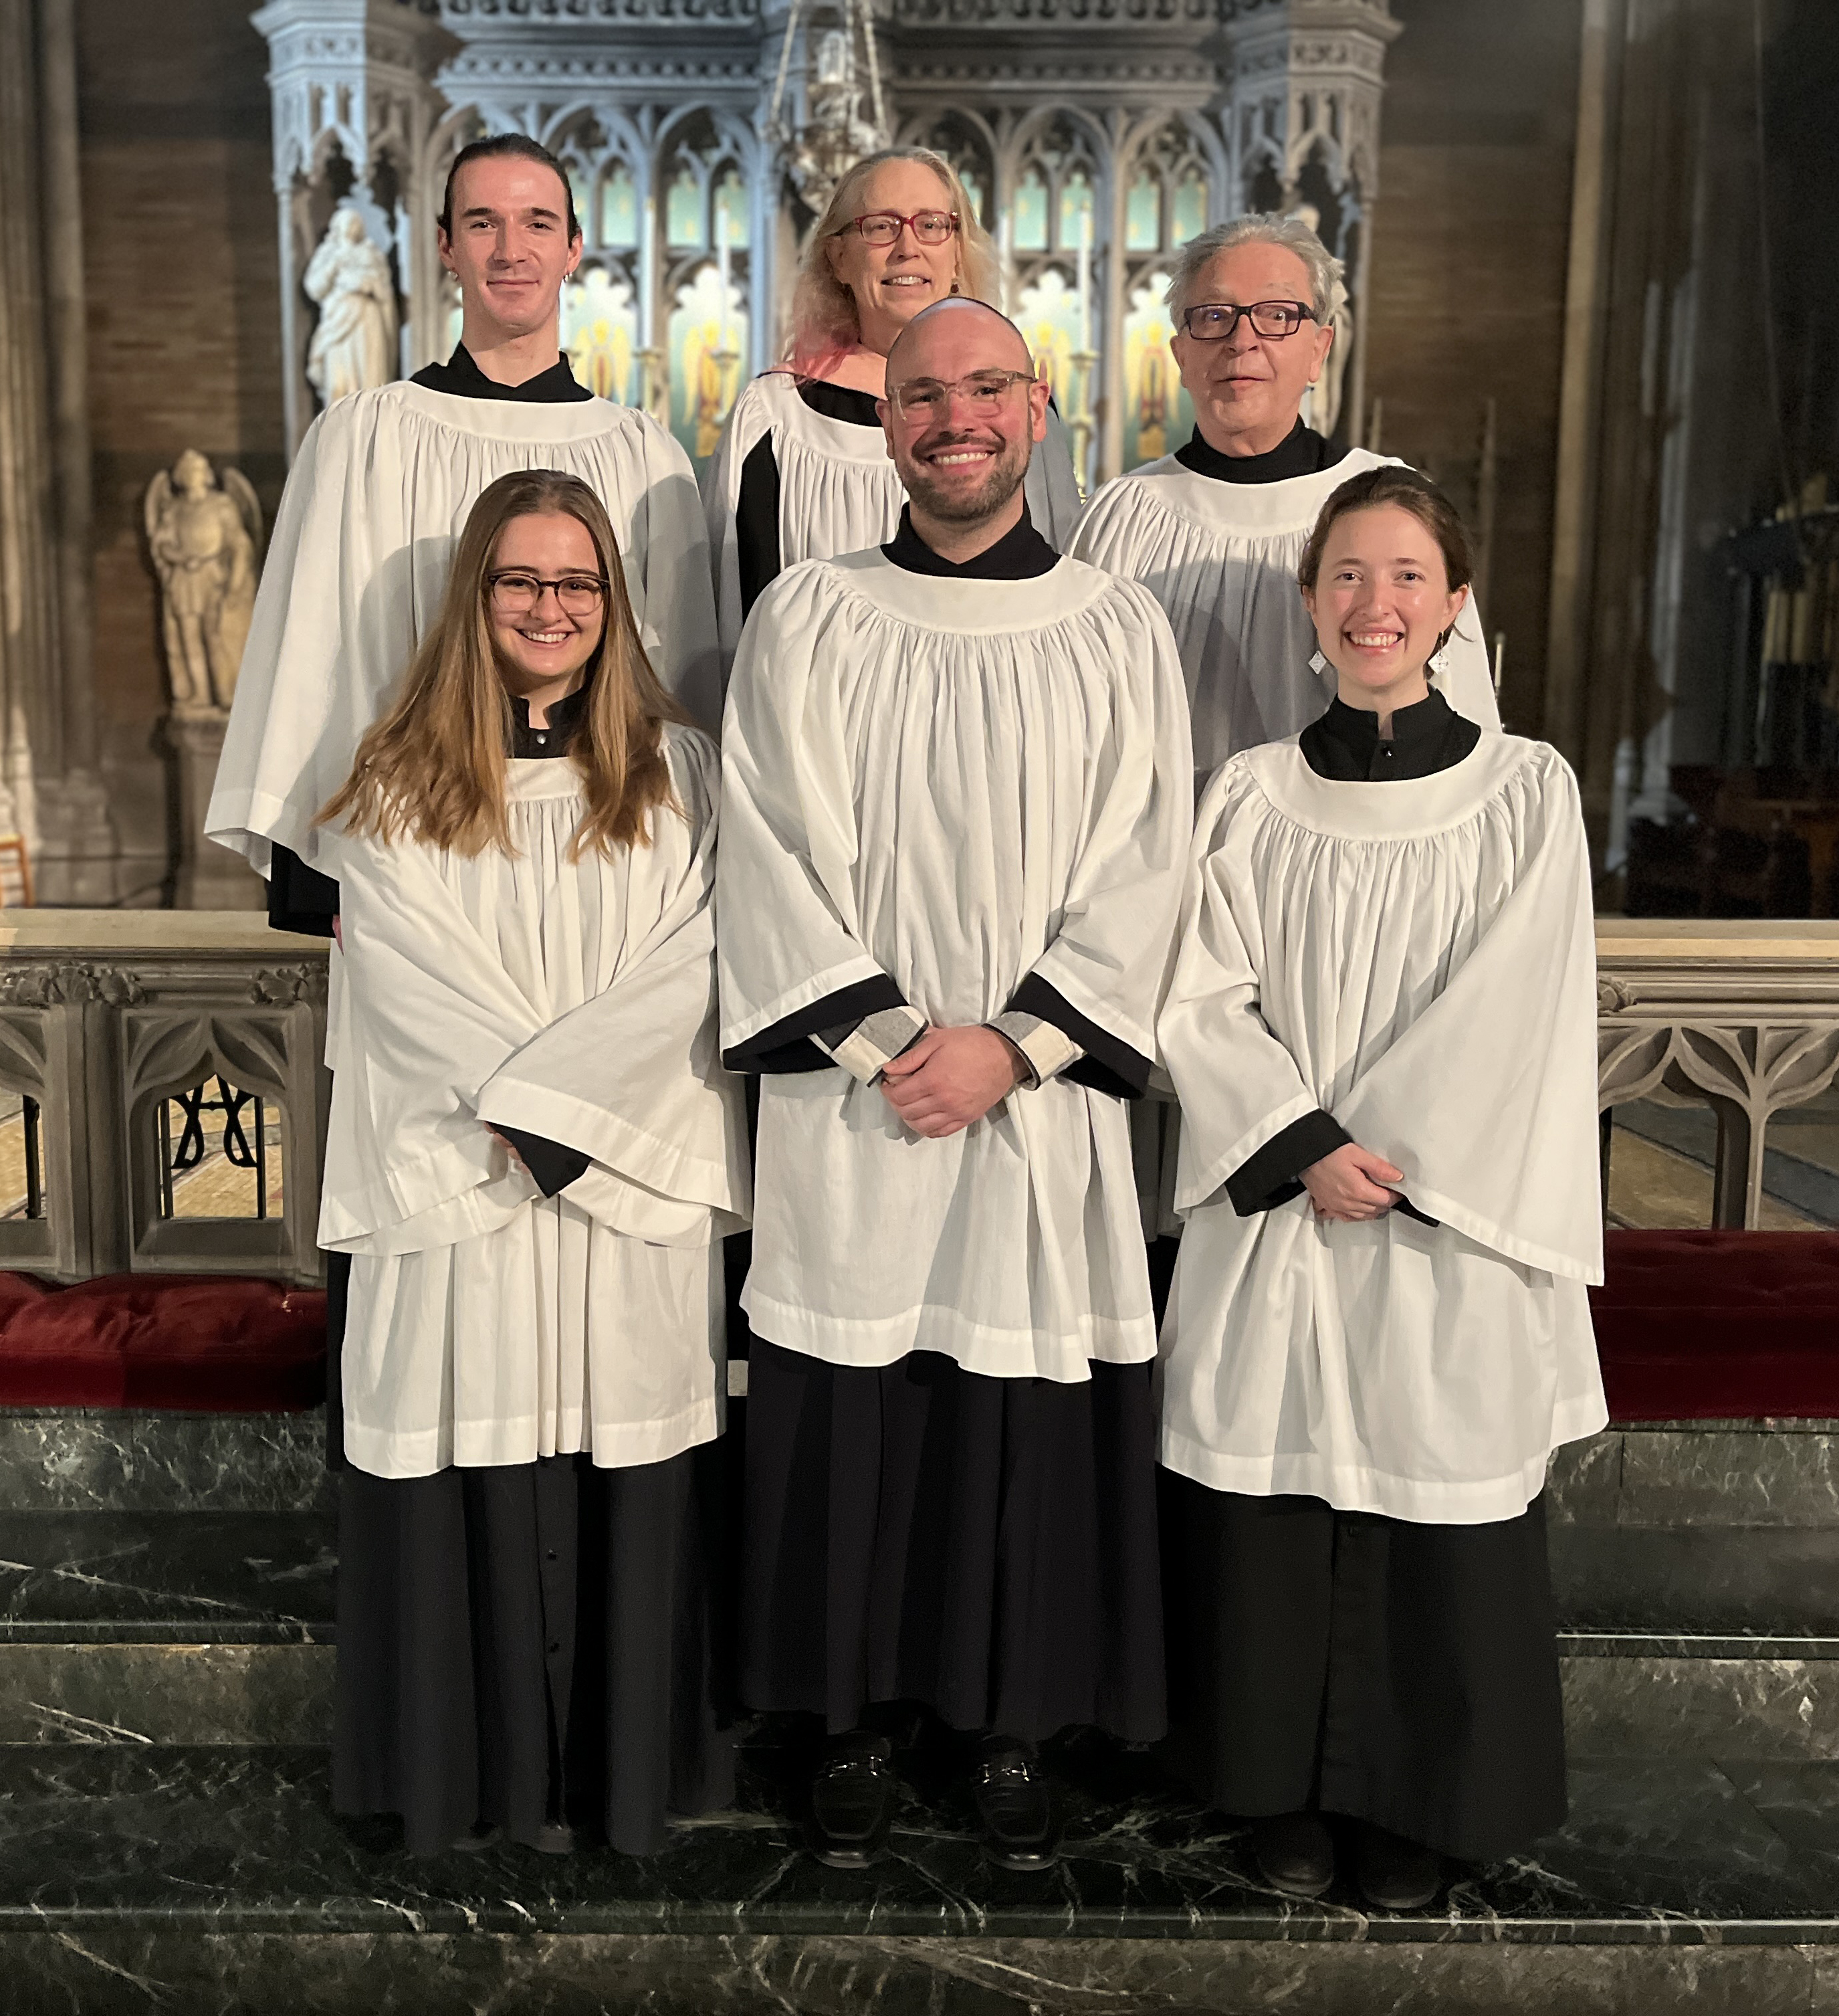 The Choir of Saint Ignatius